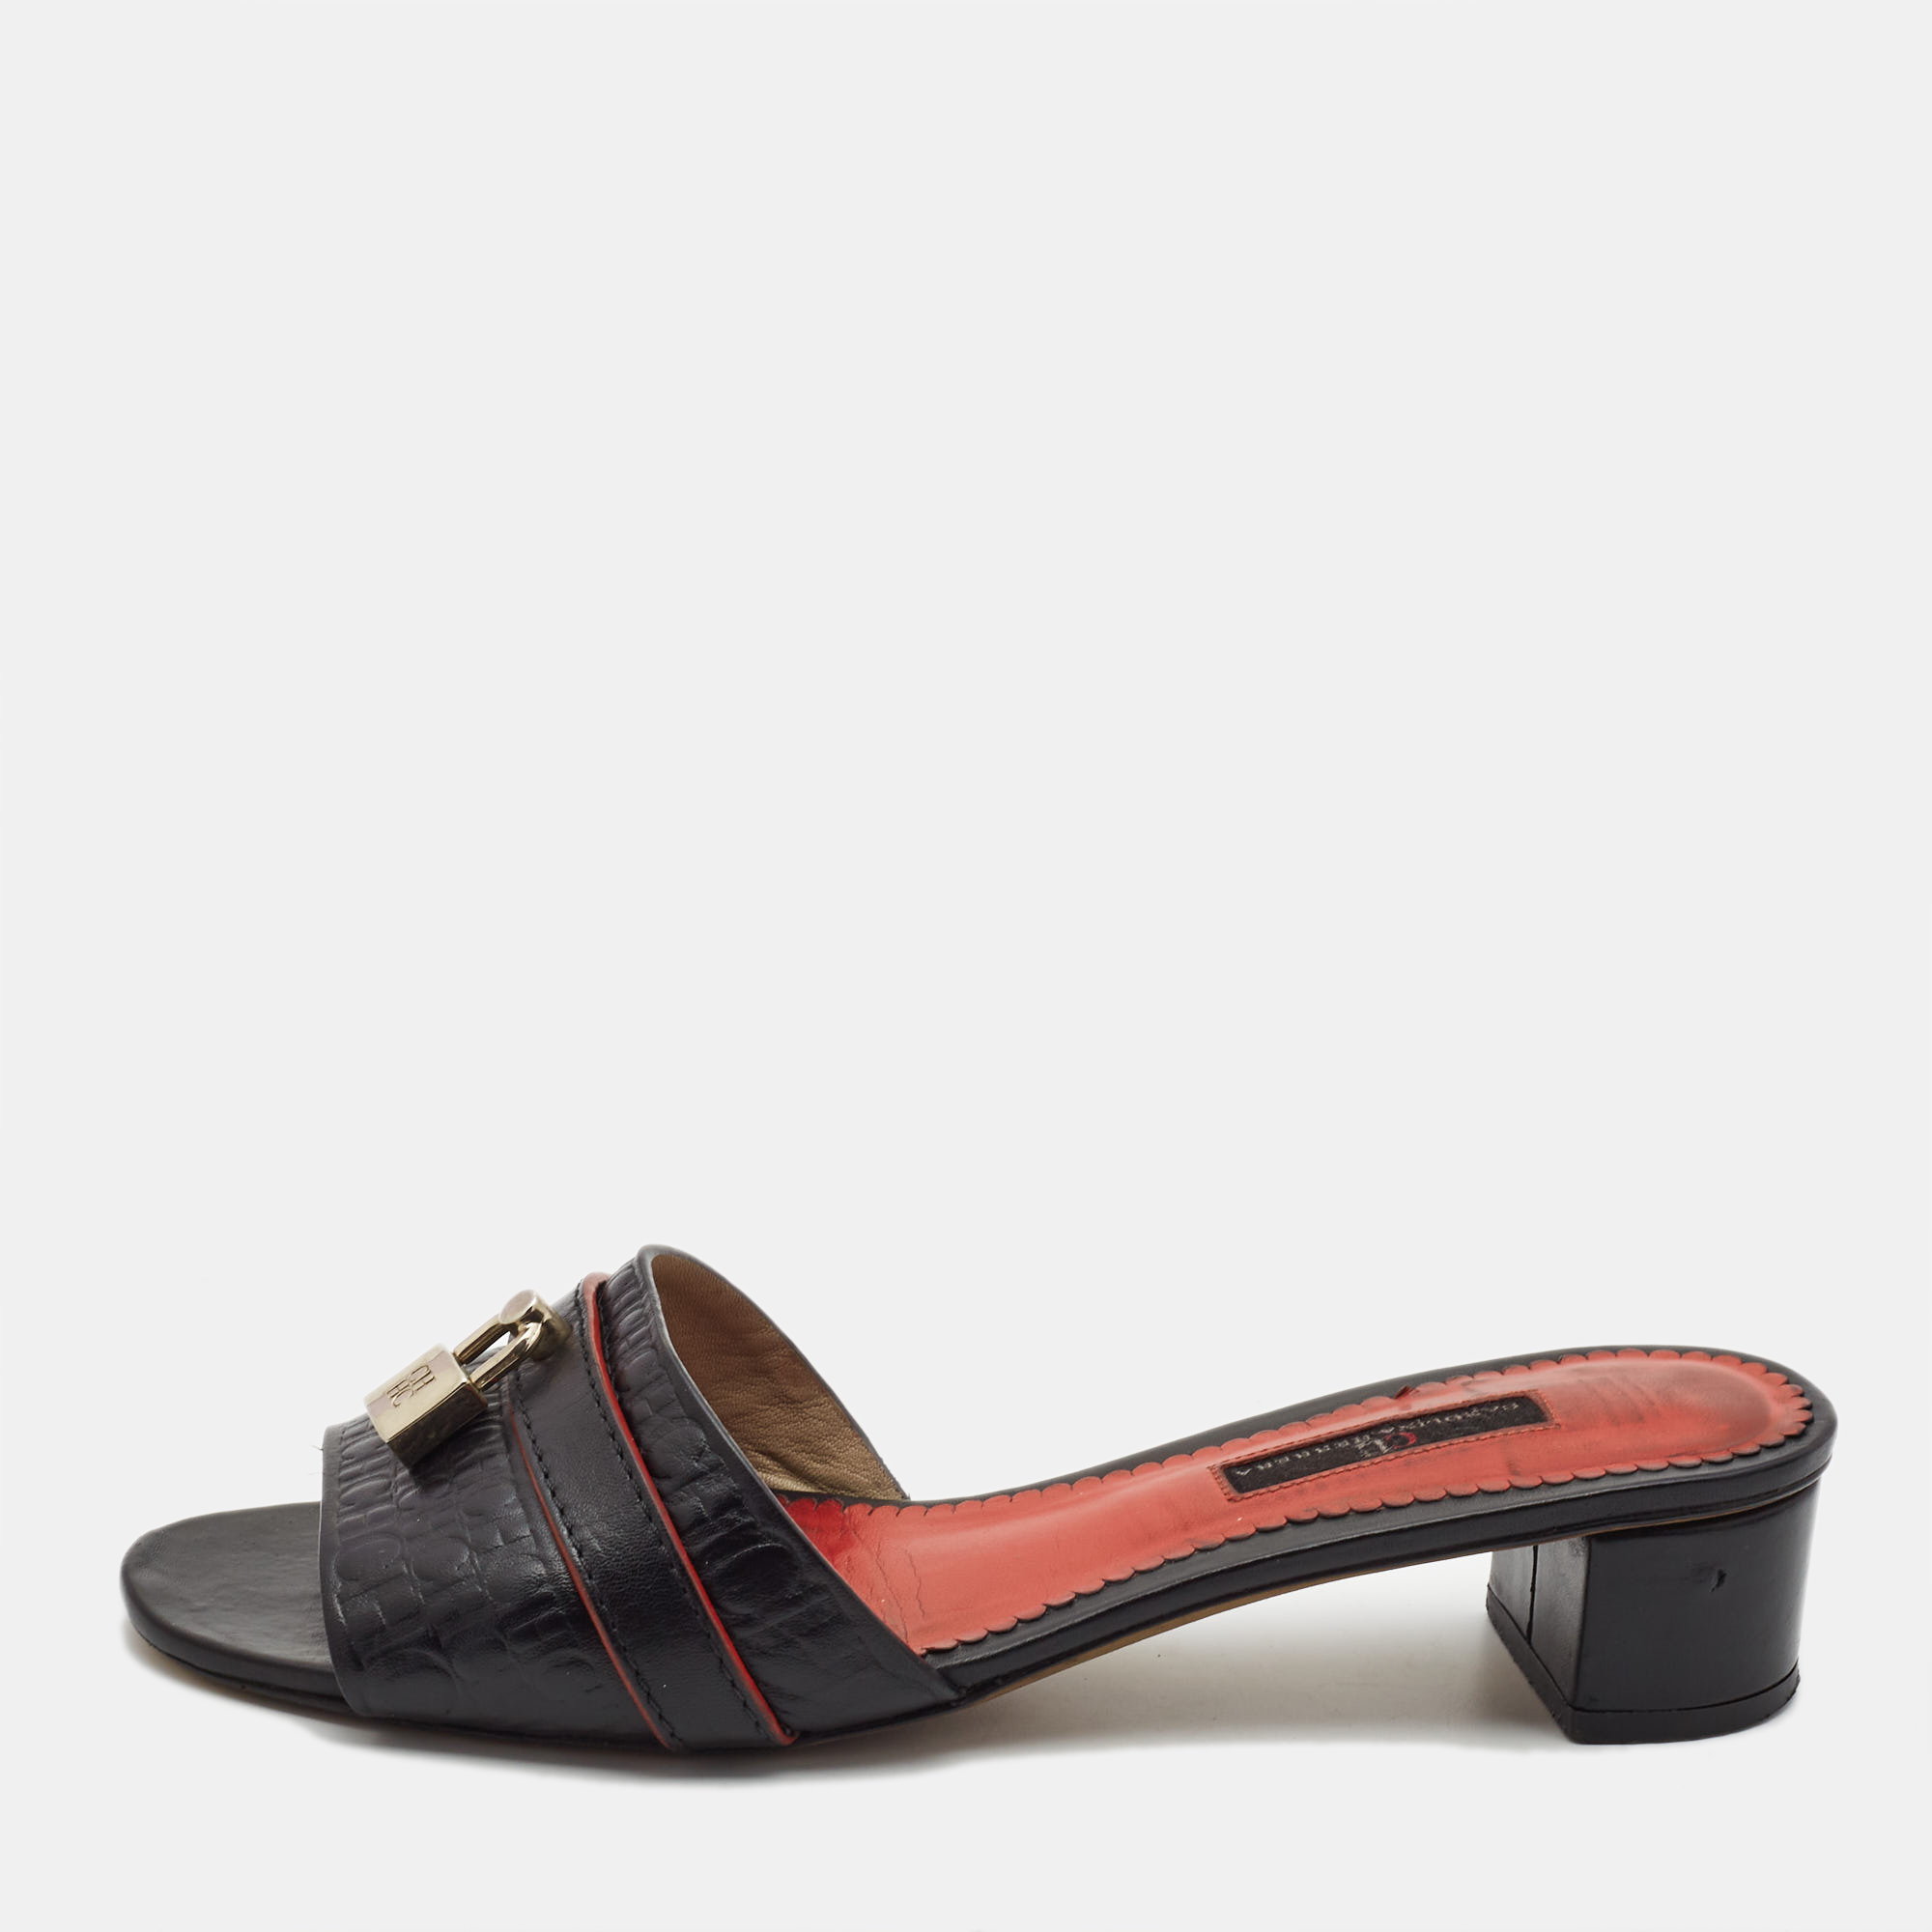 Carolina herrera black/red leather matryoshka locked sandals size 38